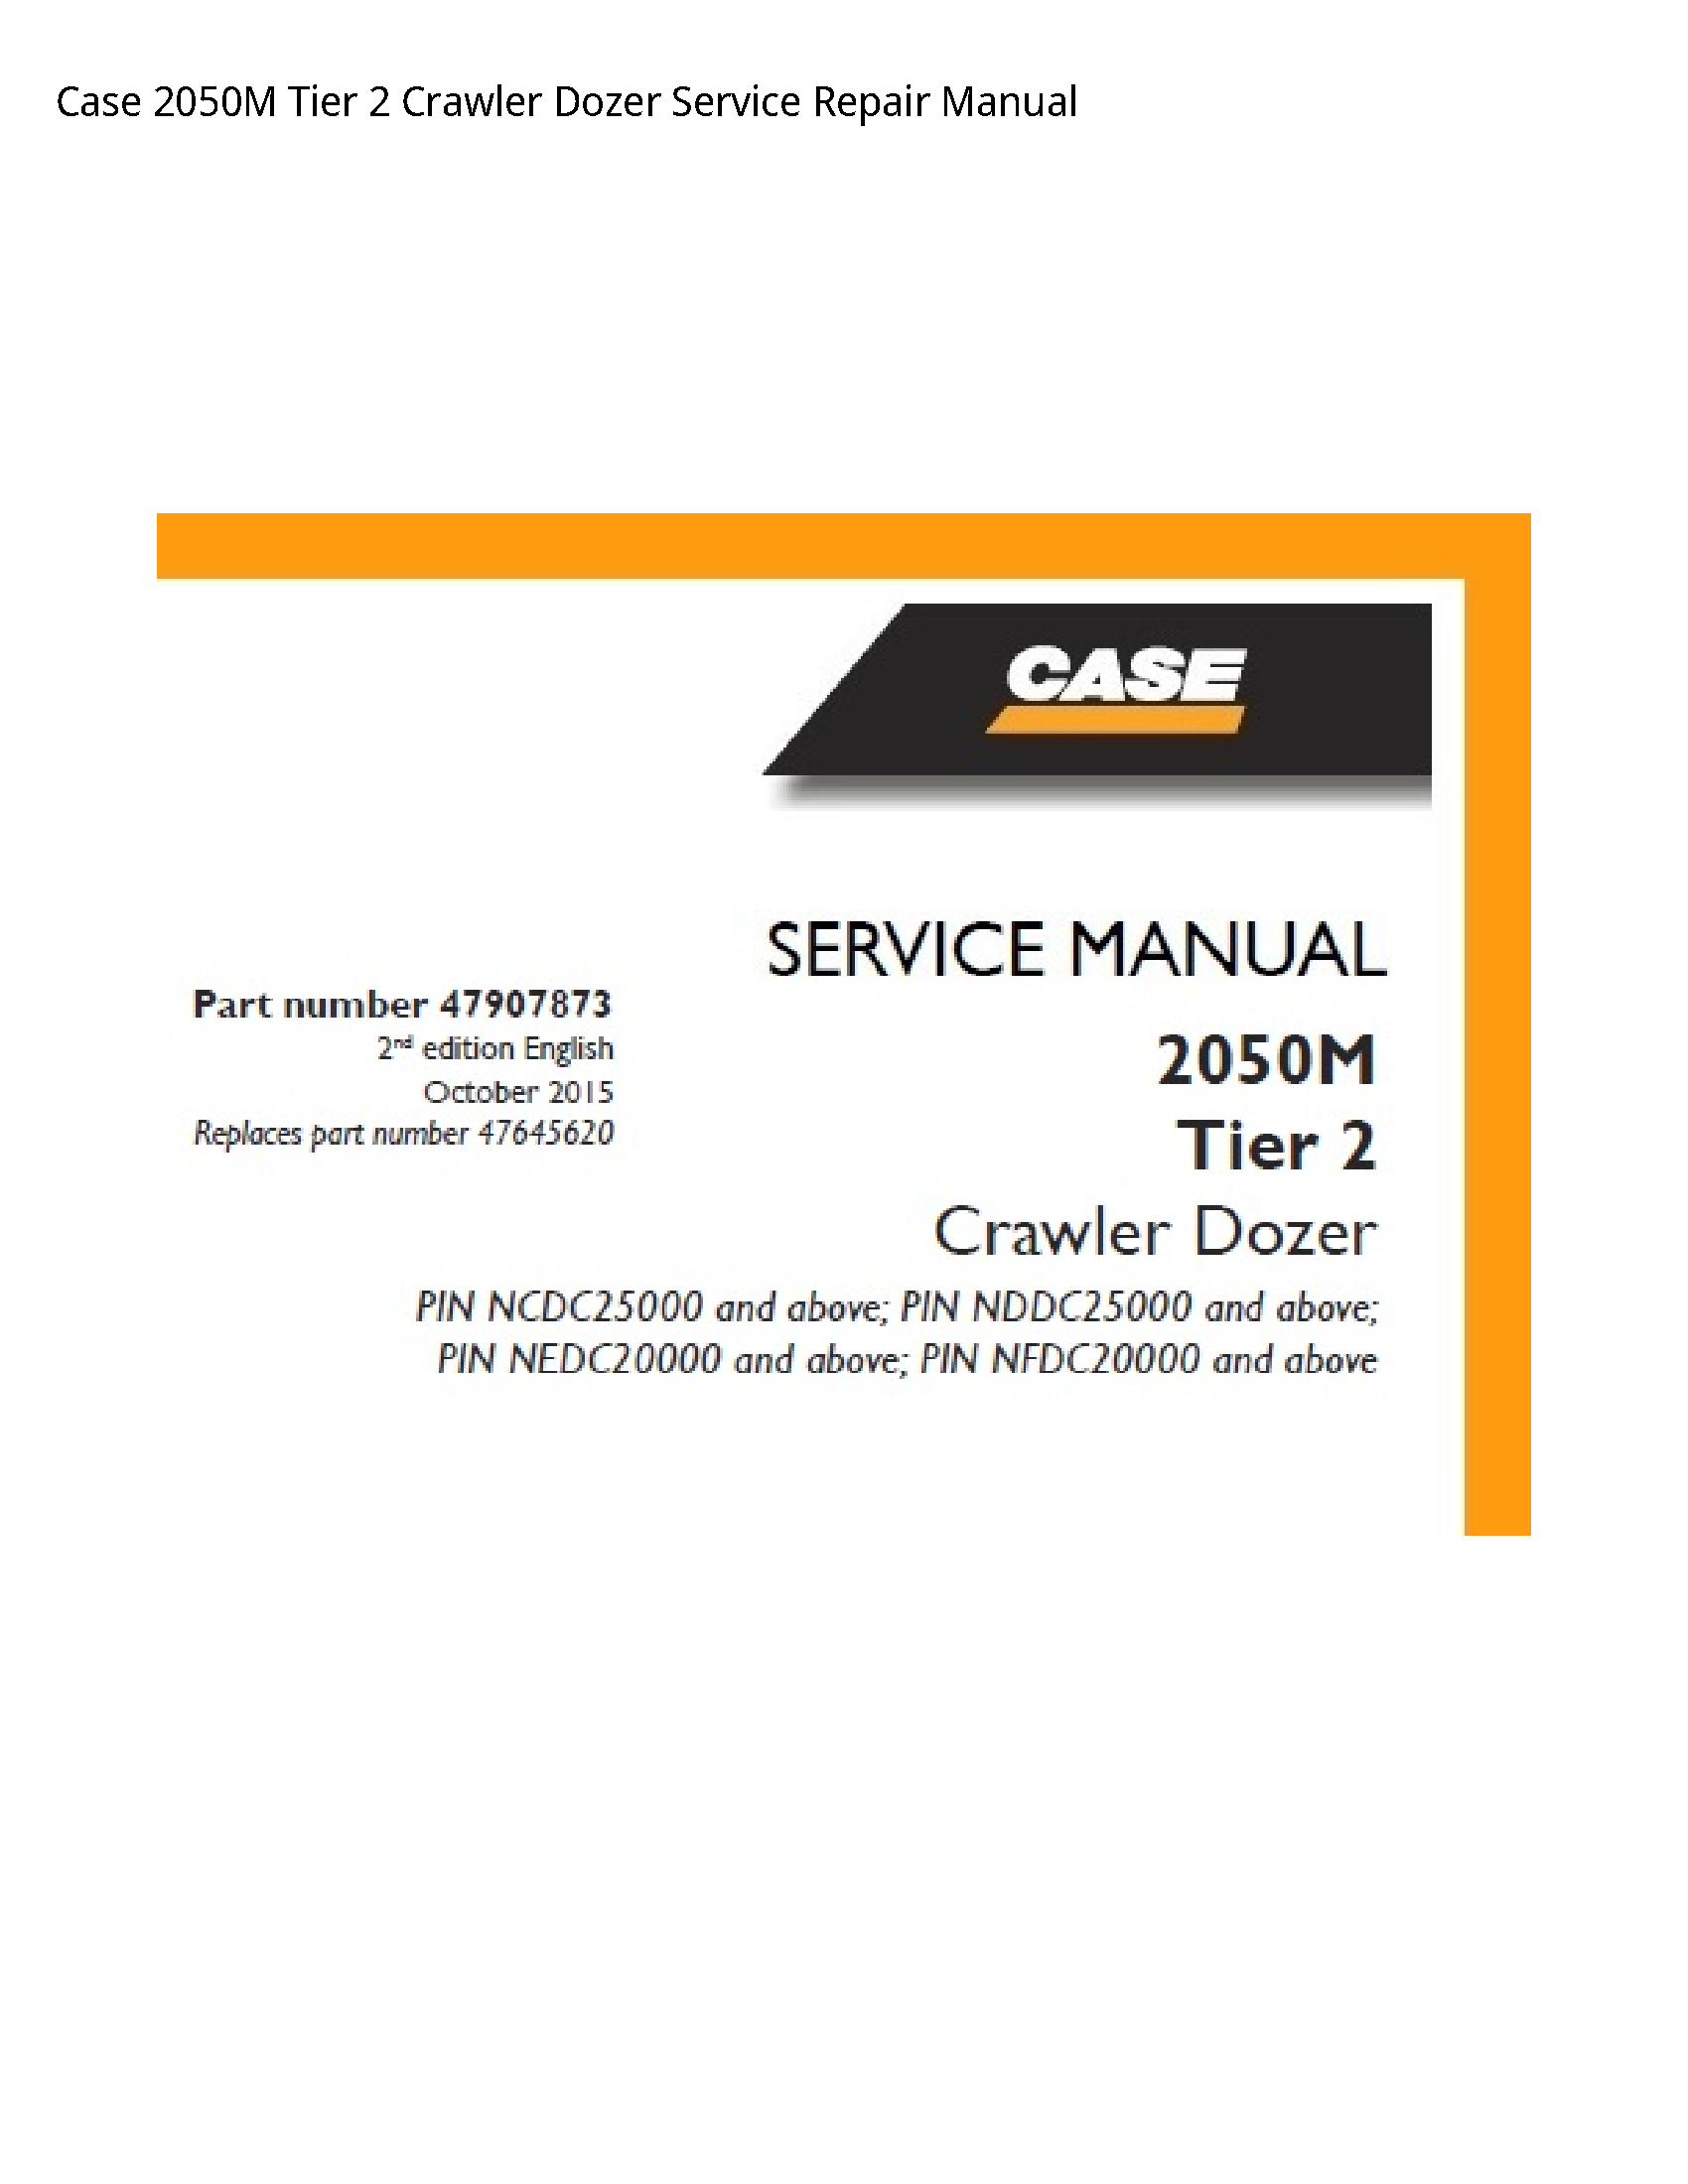 Case/Case IH 2050M Tier Crawler Dozer manual